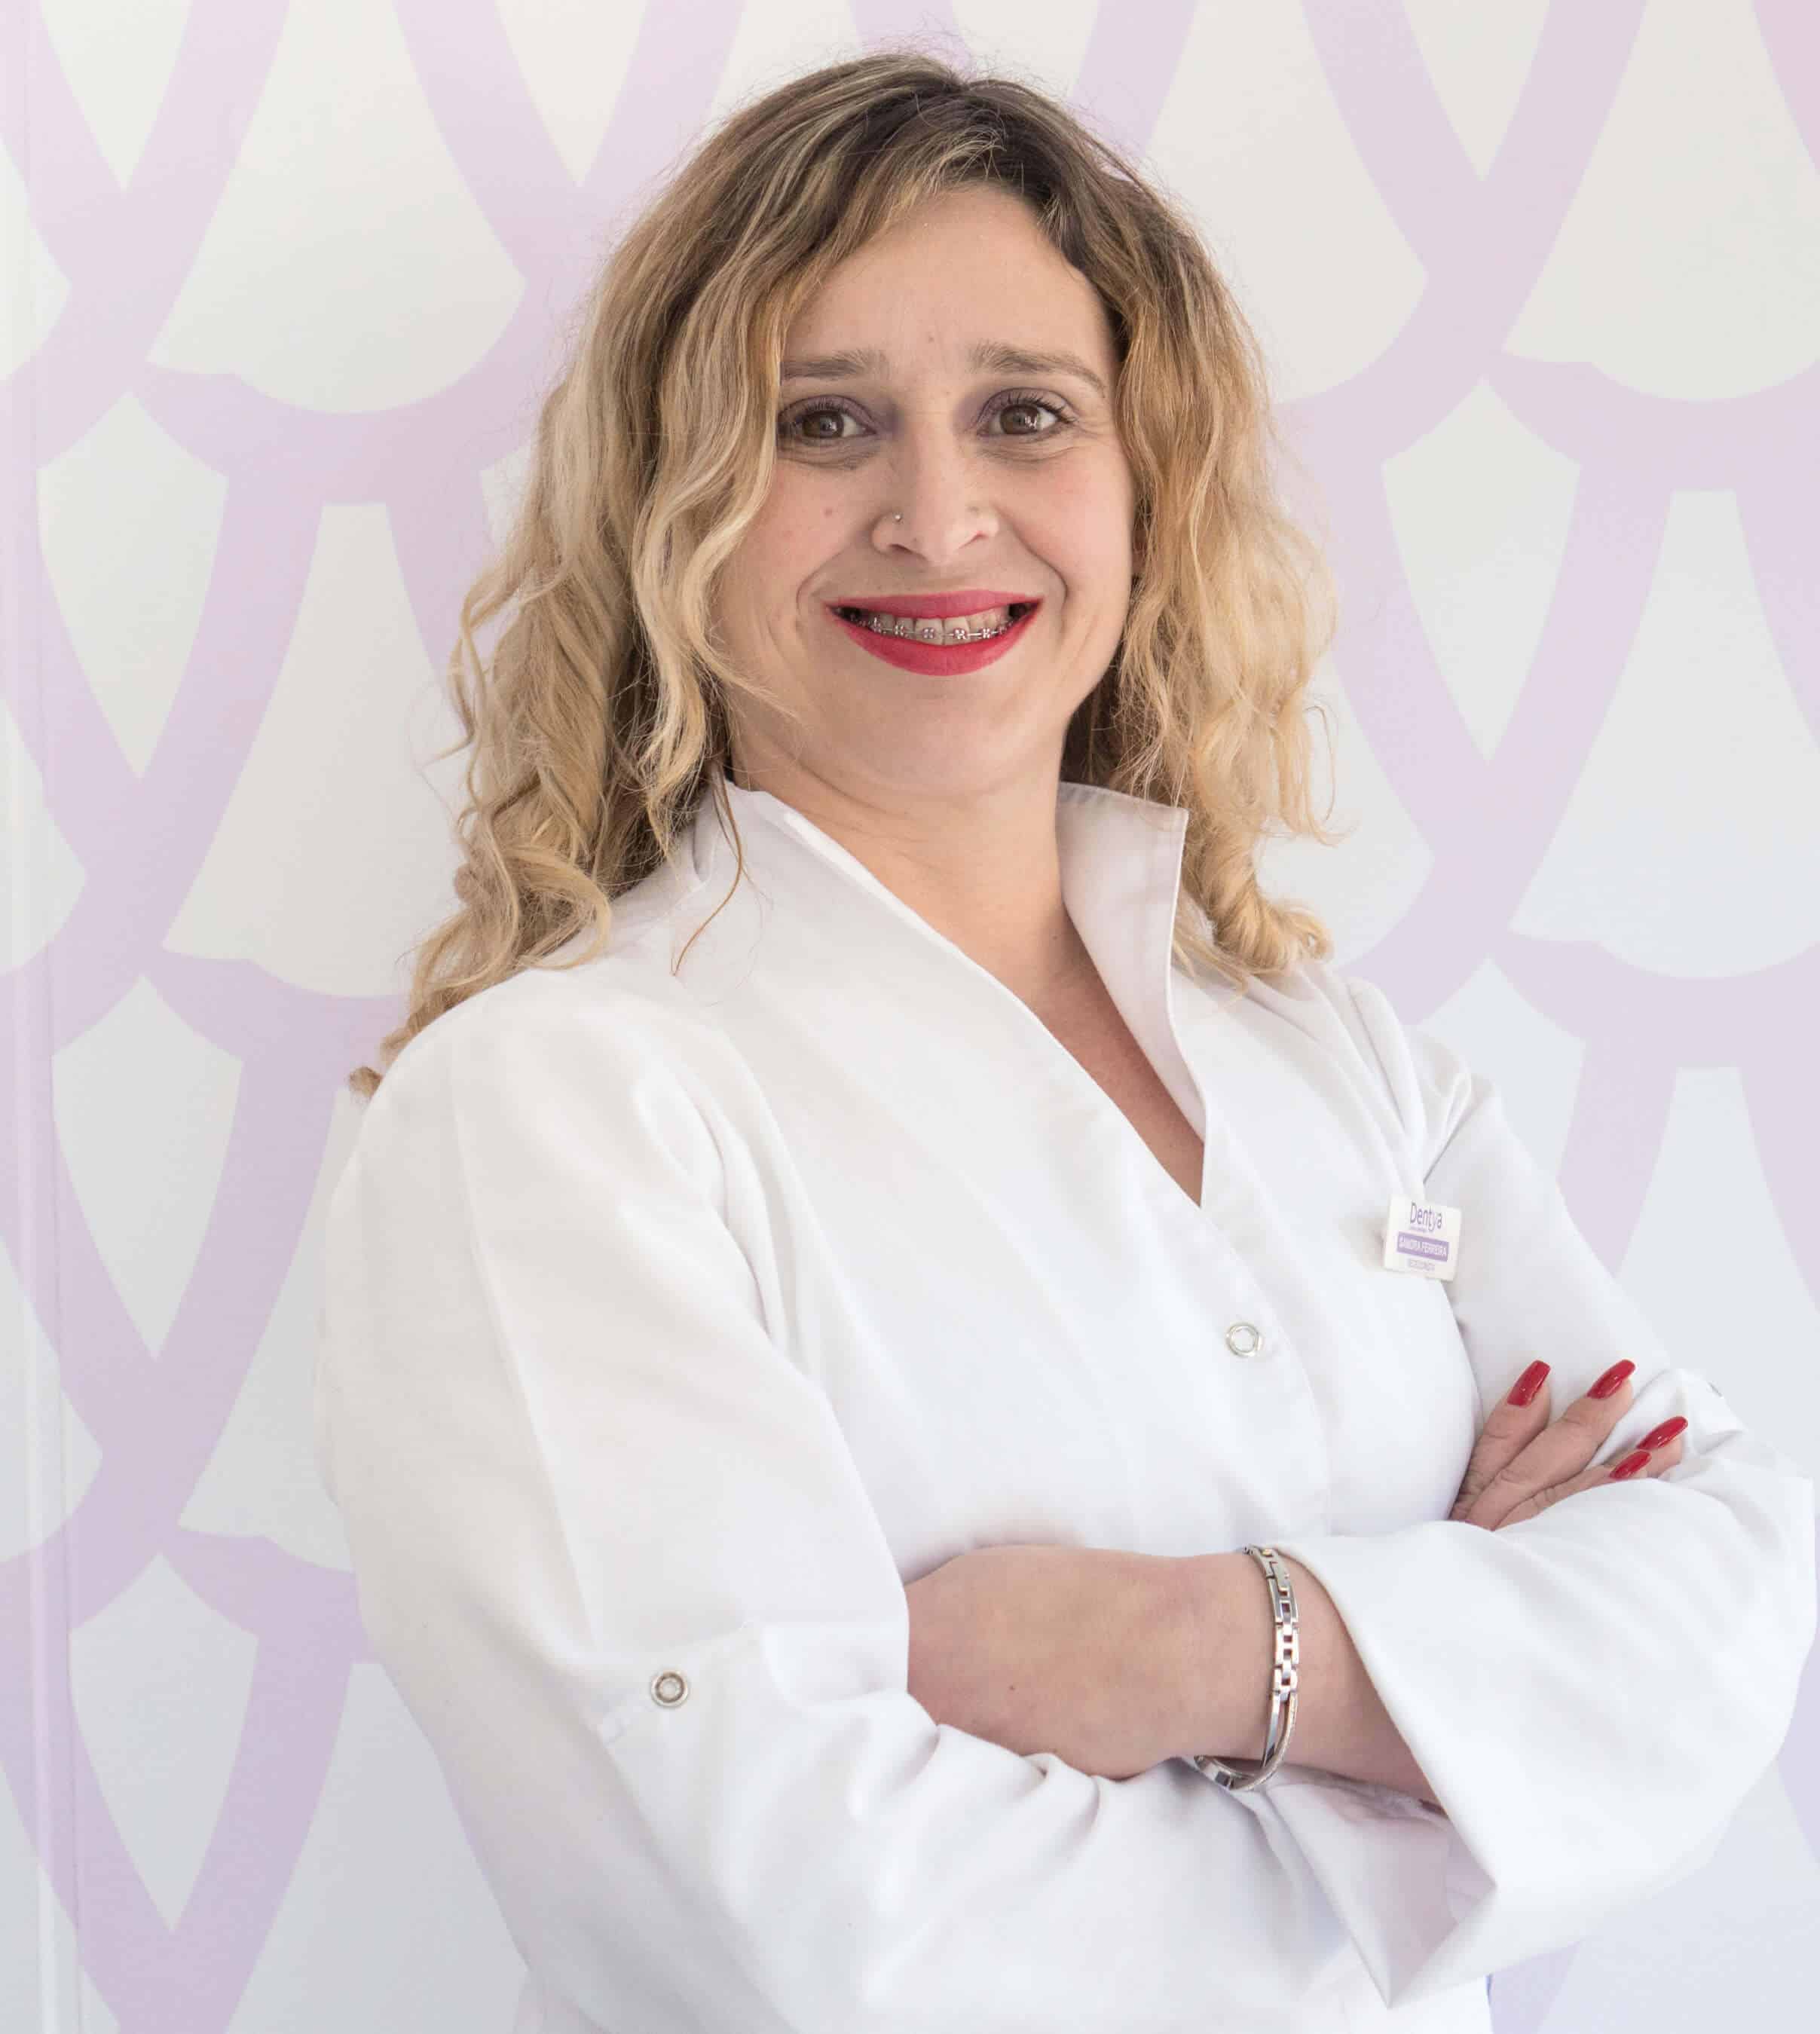 Doutora Queli Henriques, médica dentista e directora clínica da Dentya